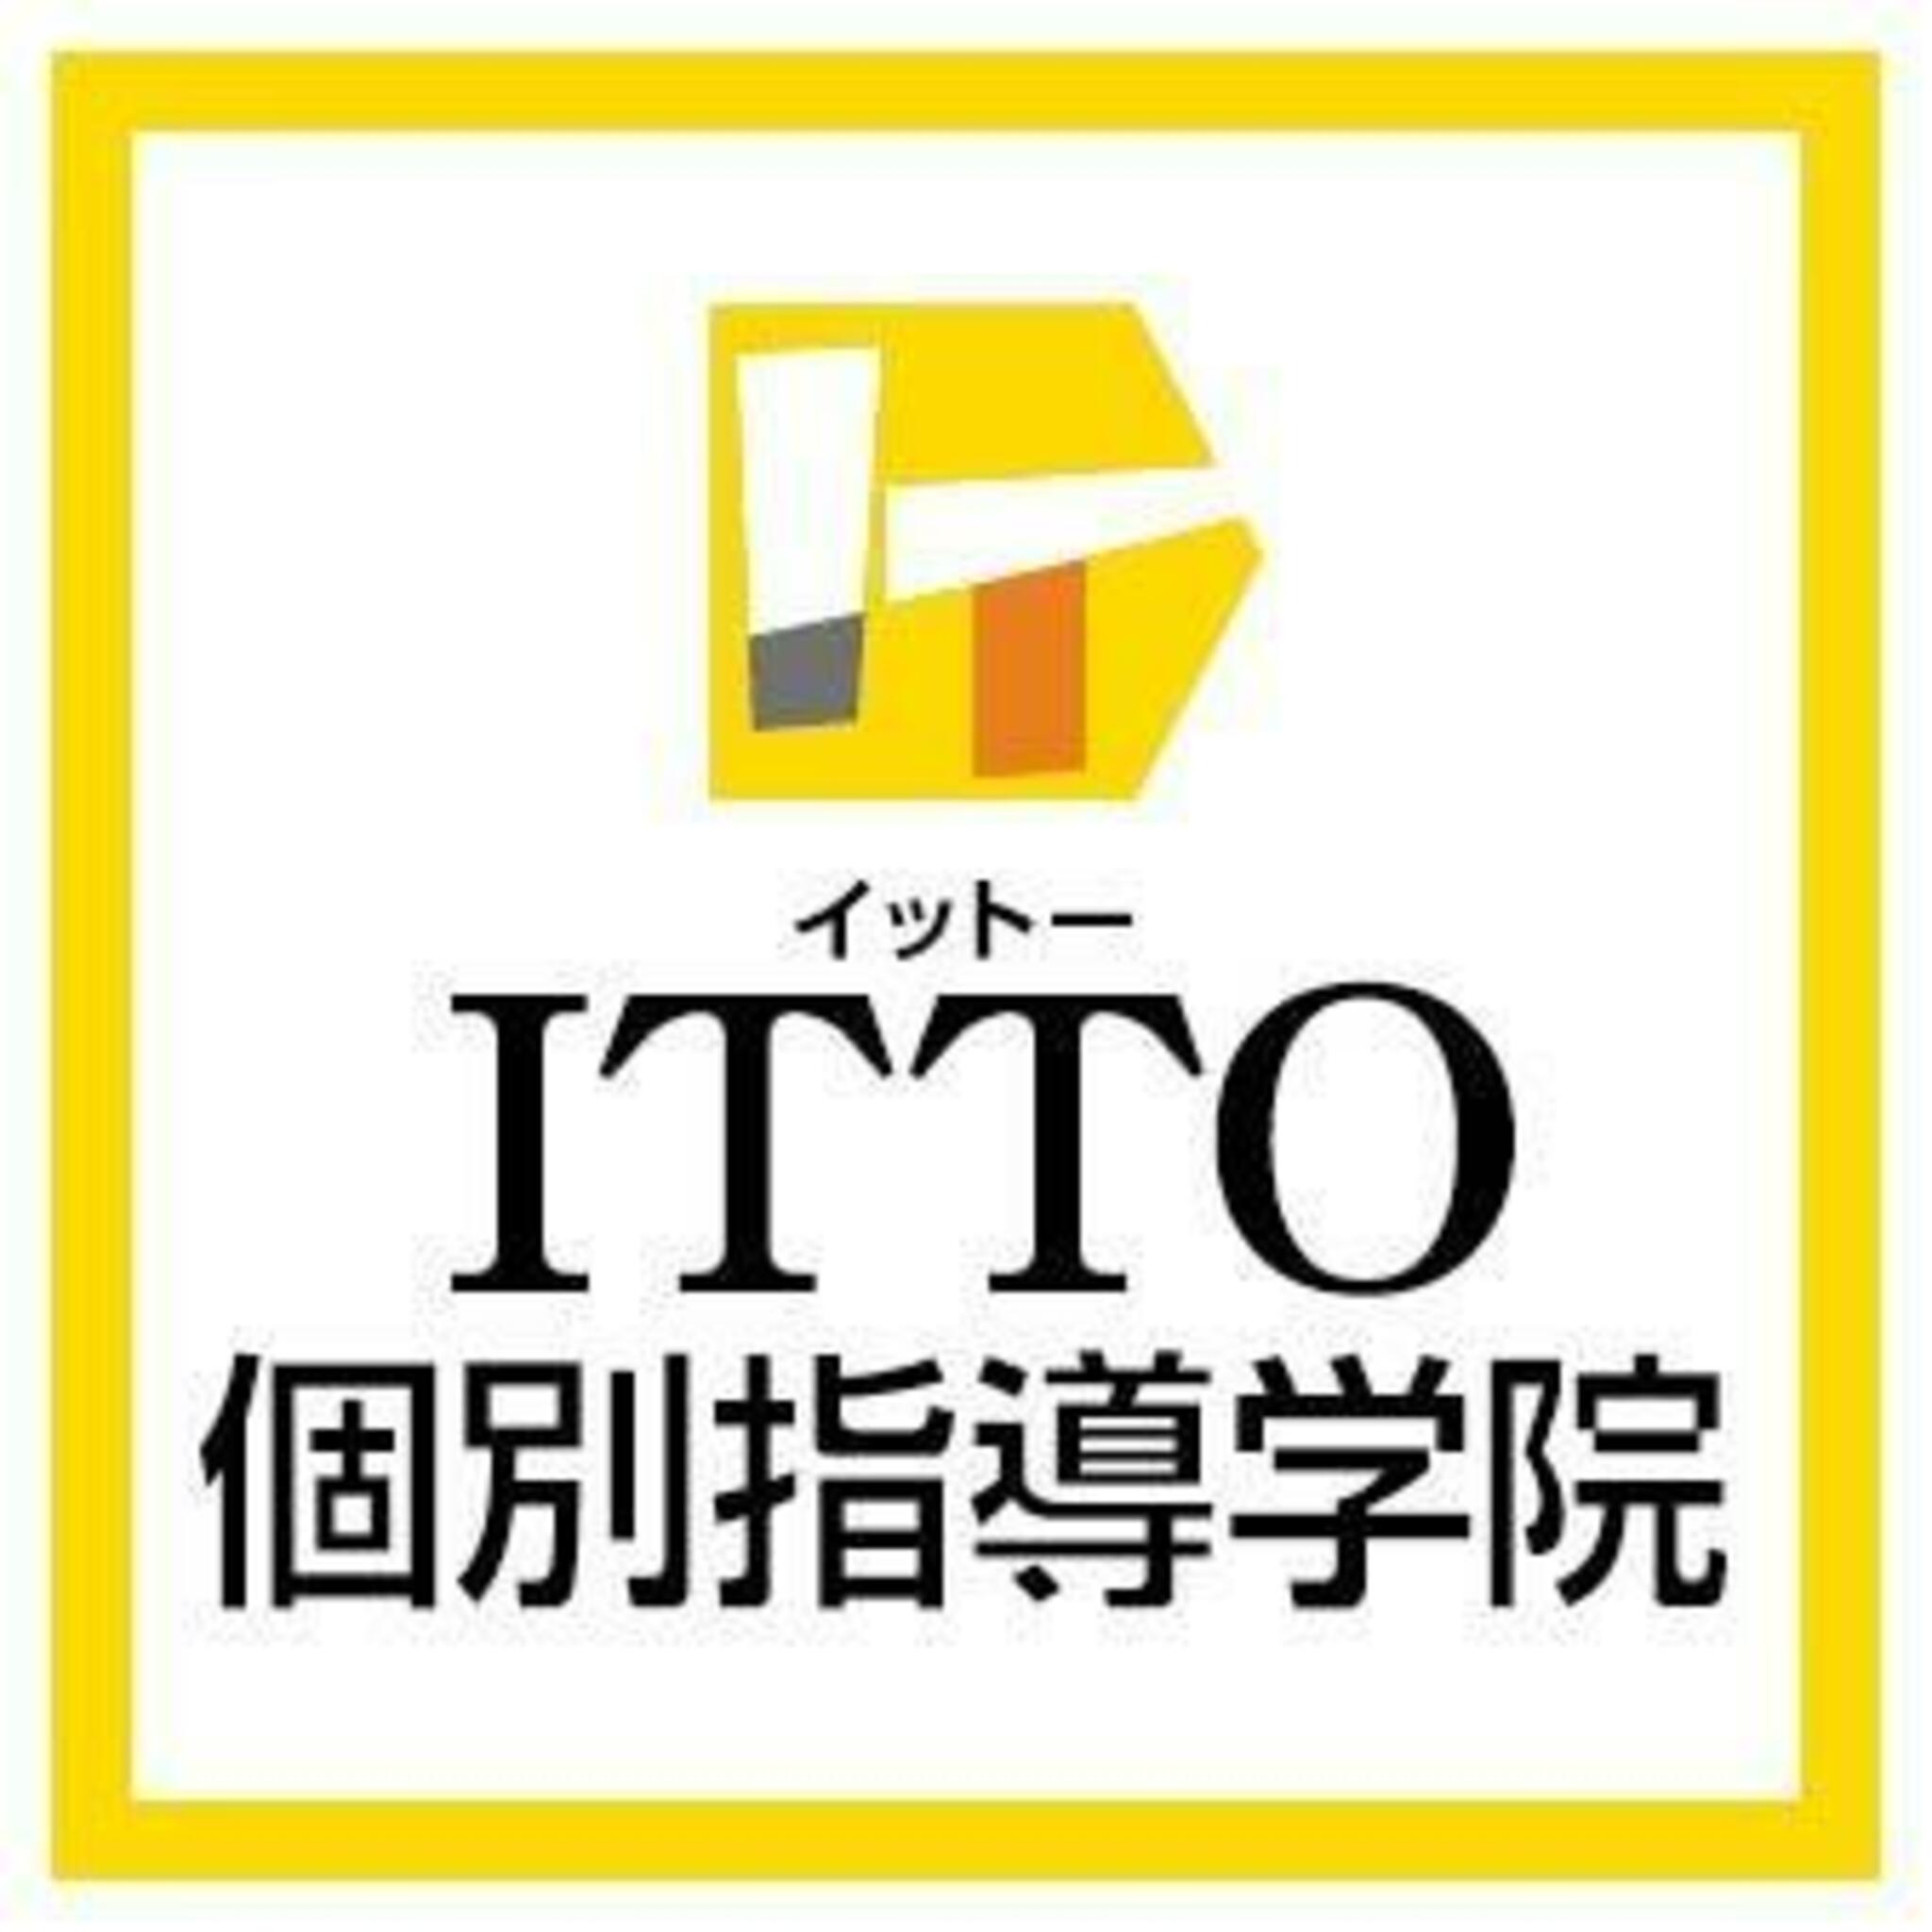 ITTO個別指導学院 上福岡桜通り校の代表写真8